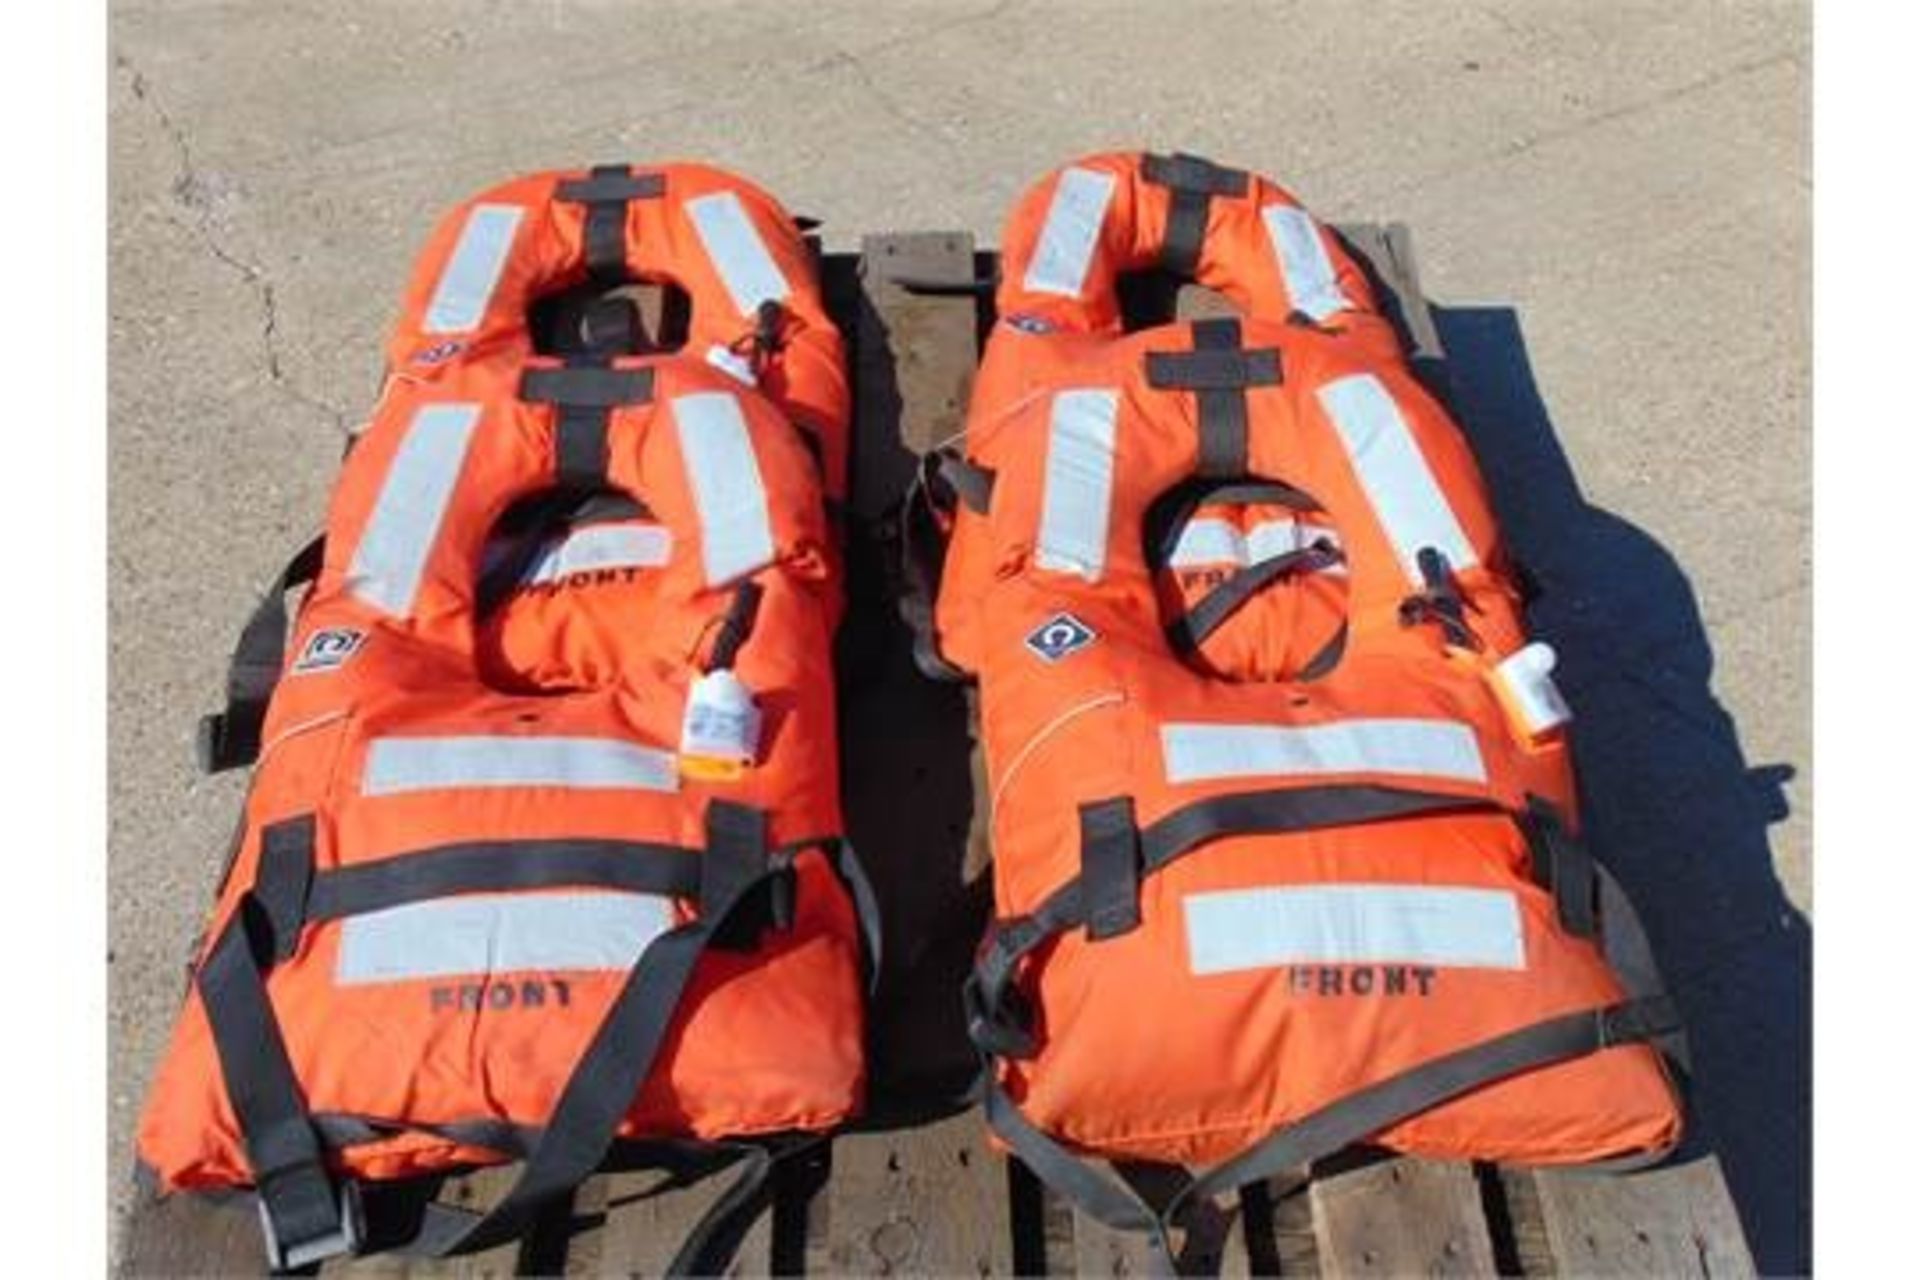 Qty 4 x Crewsaver 150N Air Foam Lifejackets